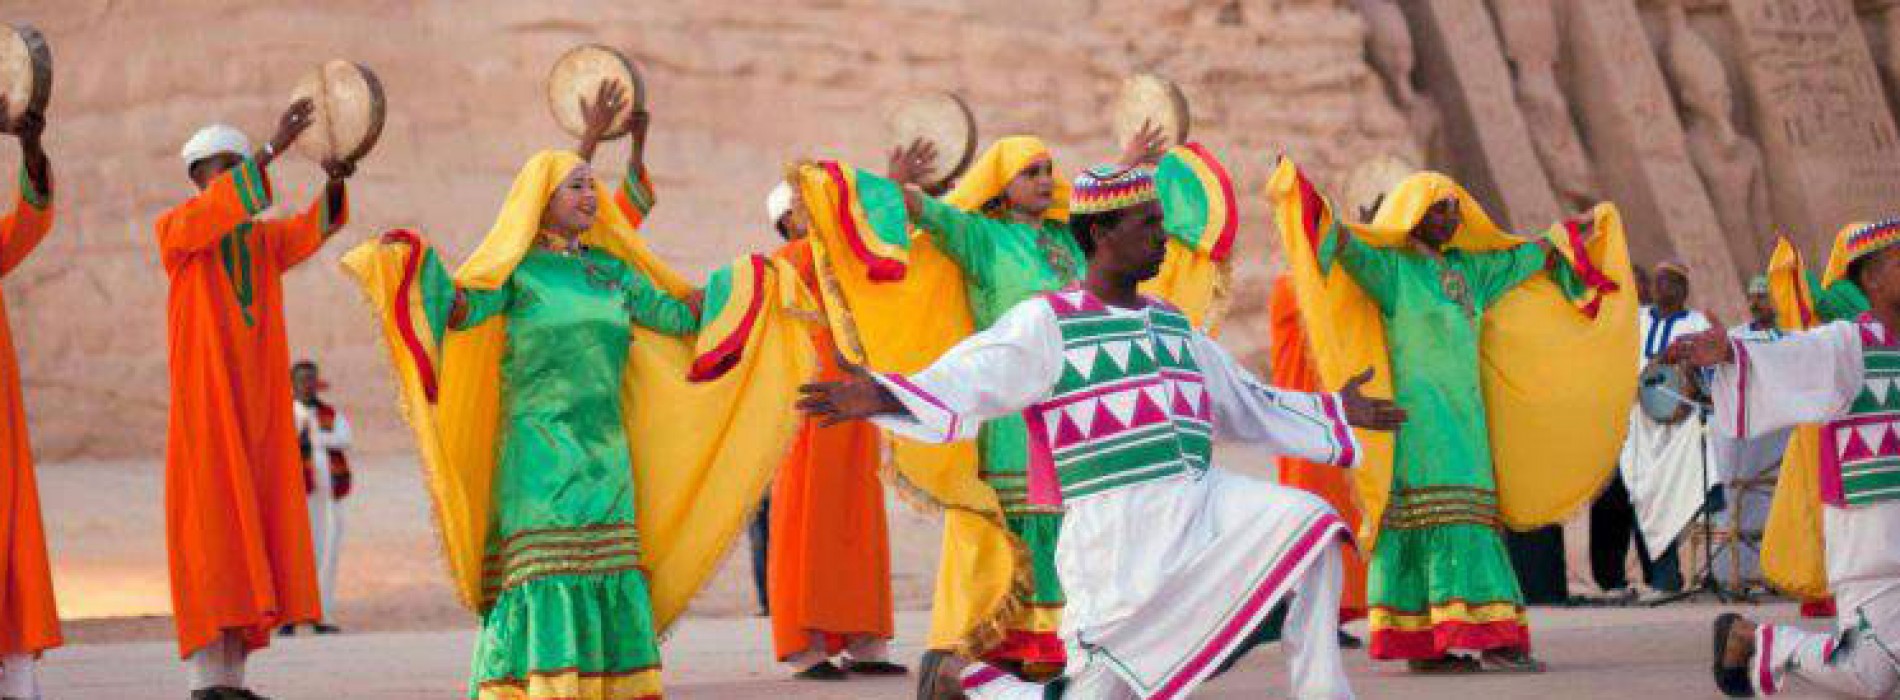 Explore the Awe-inspiring Sun Festival in South Egypt